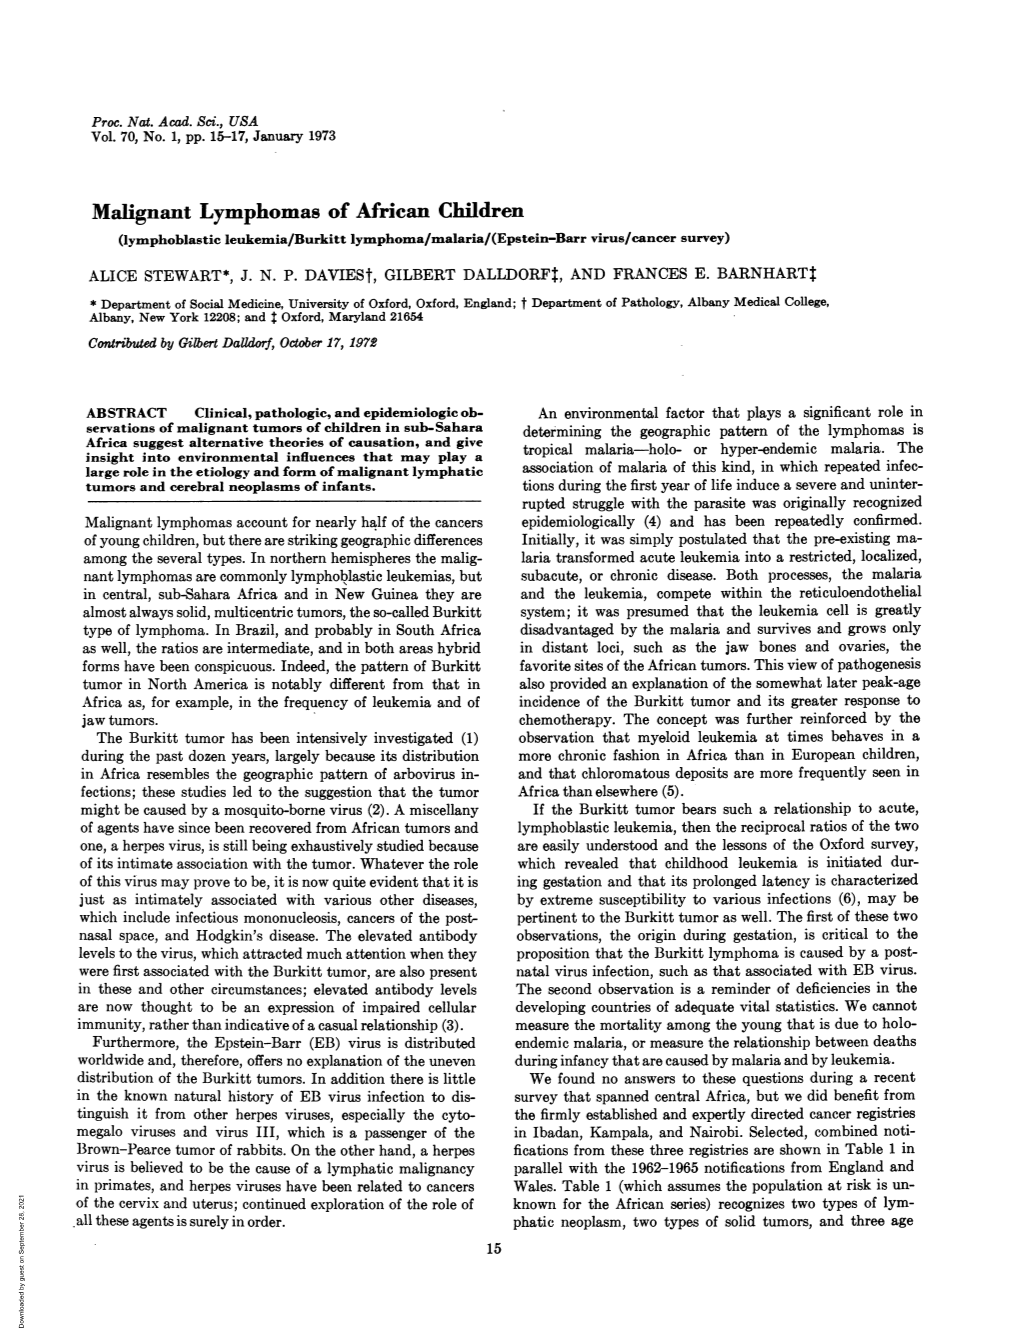 Malignant Lymphomas of African Children (Lymphoblastic Leukemia/Burkitt Lymphoma/Malaria/(Epstein-Barr Virus/Cancer Survey) ALICE STEWART*, J